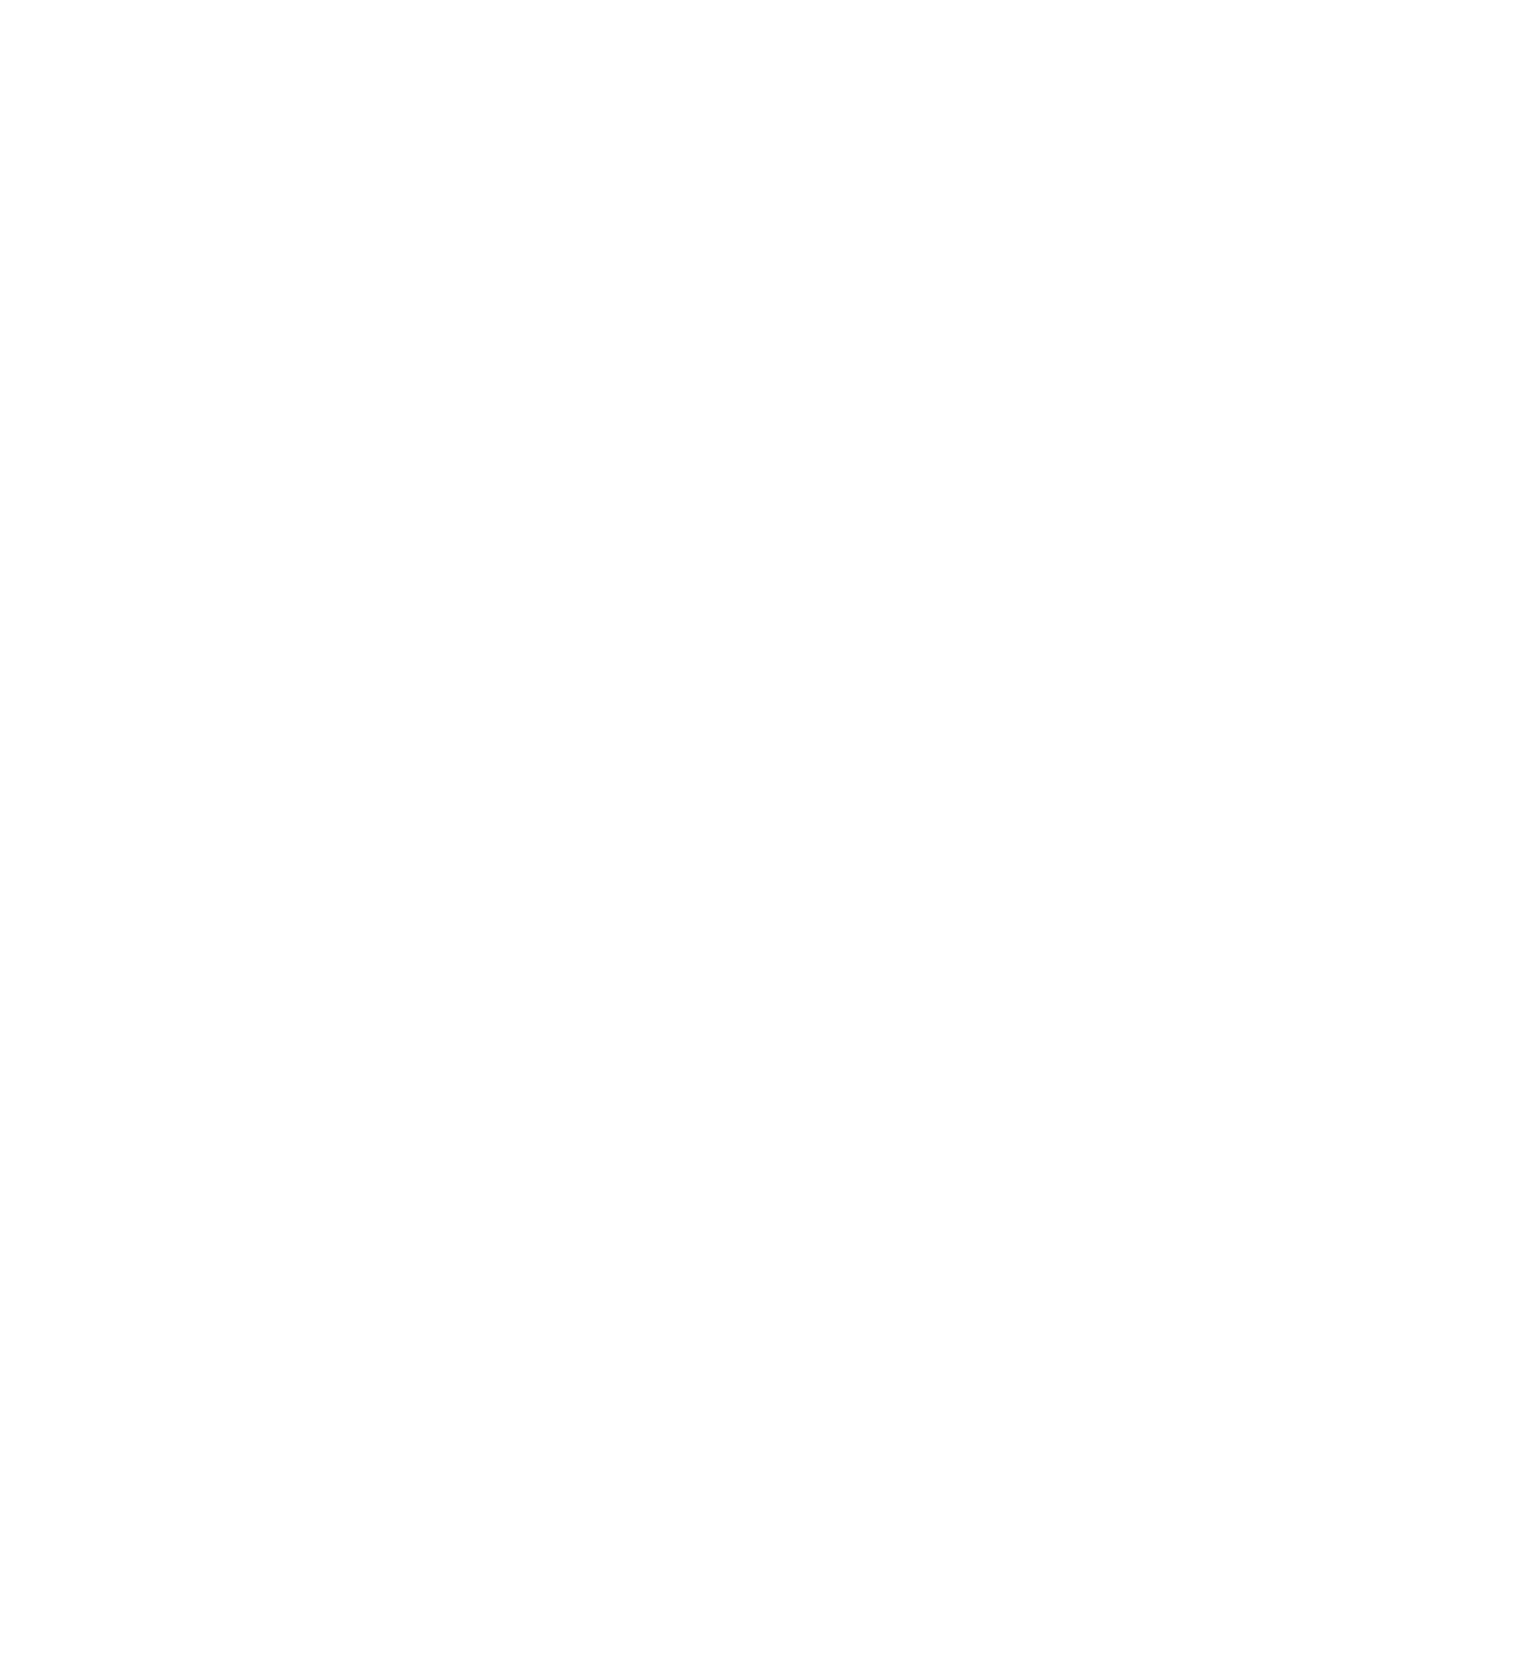 Guisborough Brewery